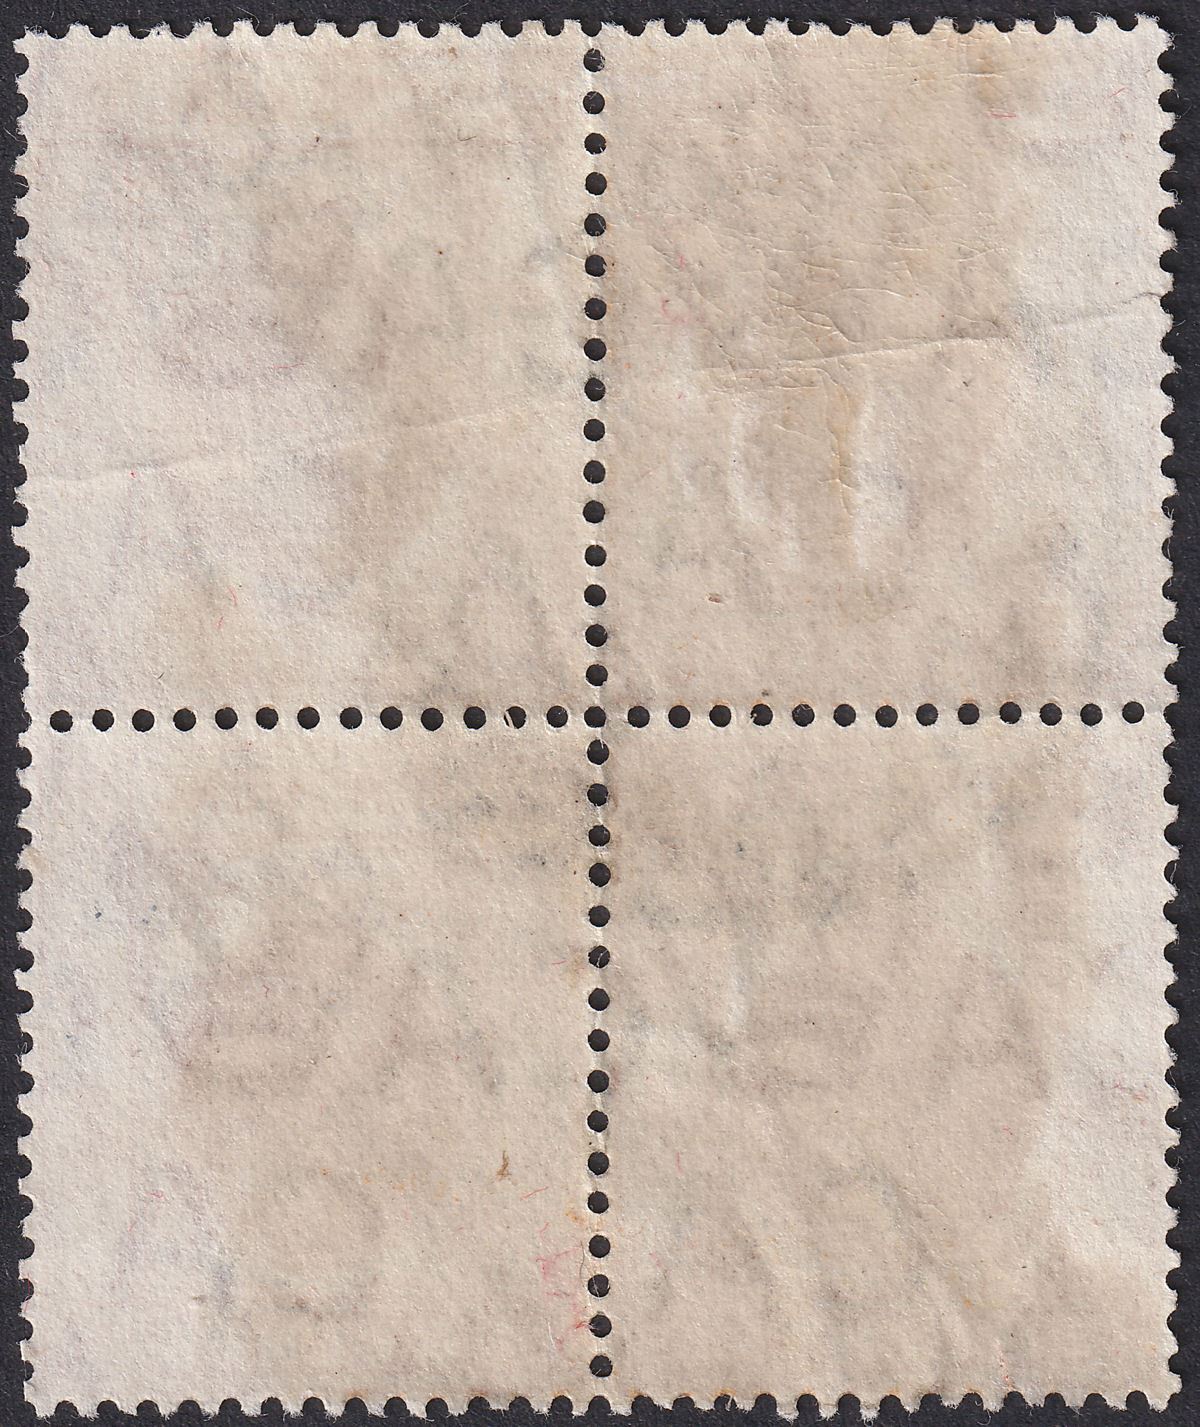 Hong Kong 1914 KGV 6c Orange Block of 4 Used with CHEFOO Postmarks SG Z299